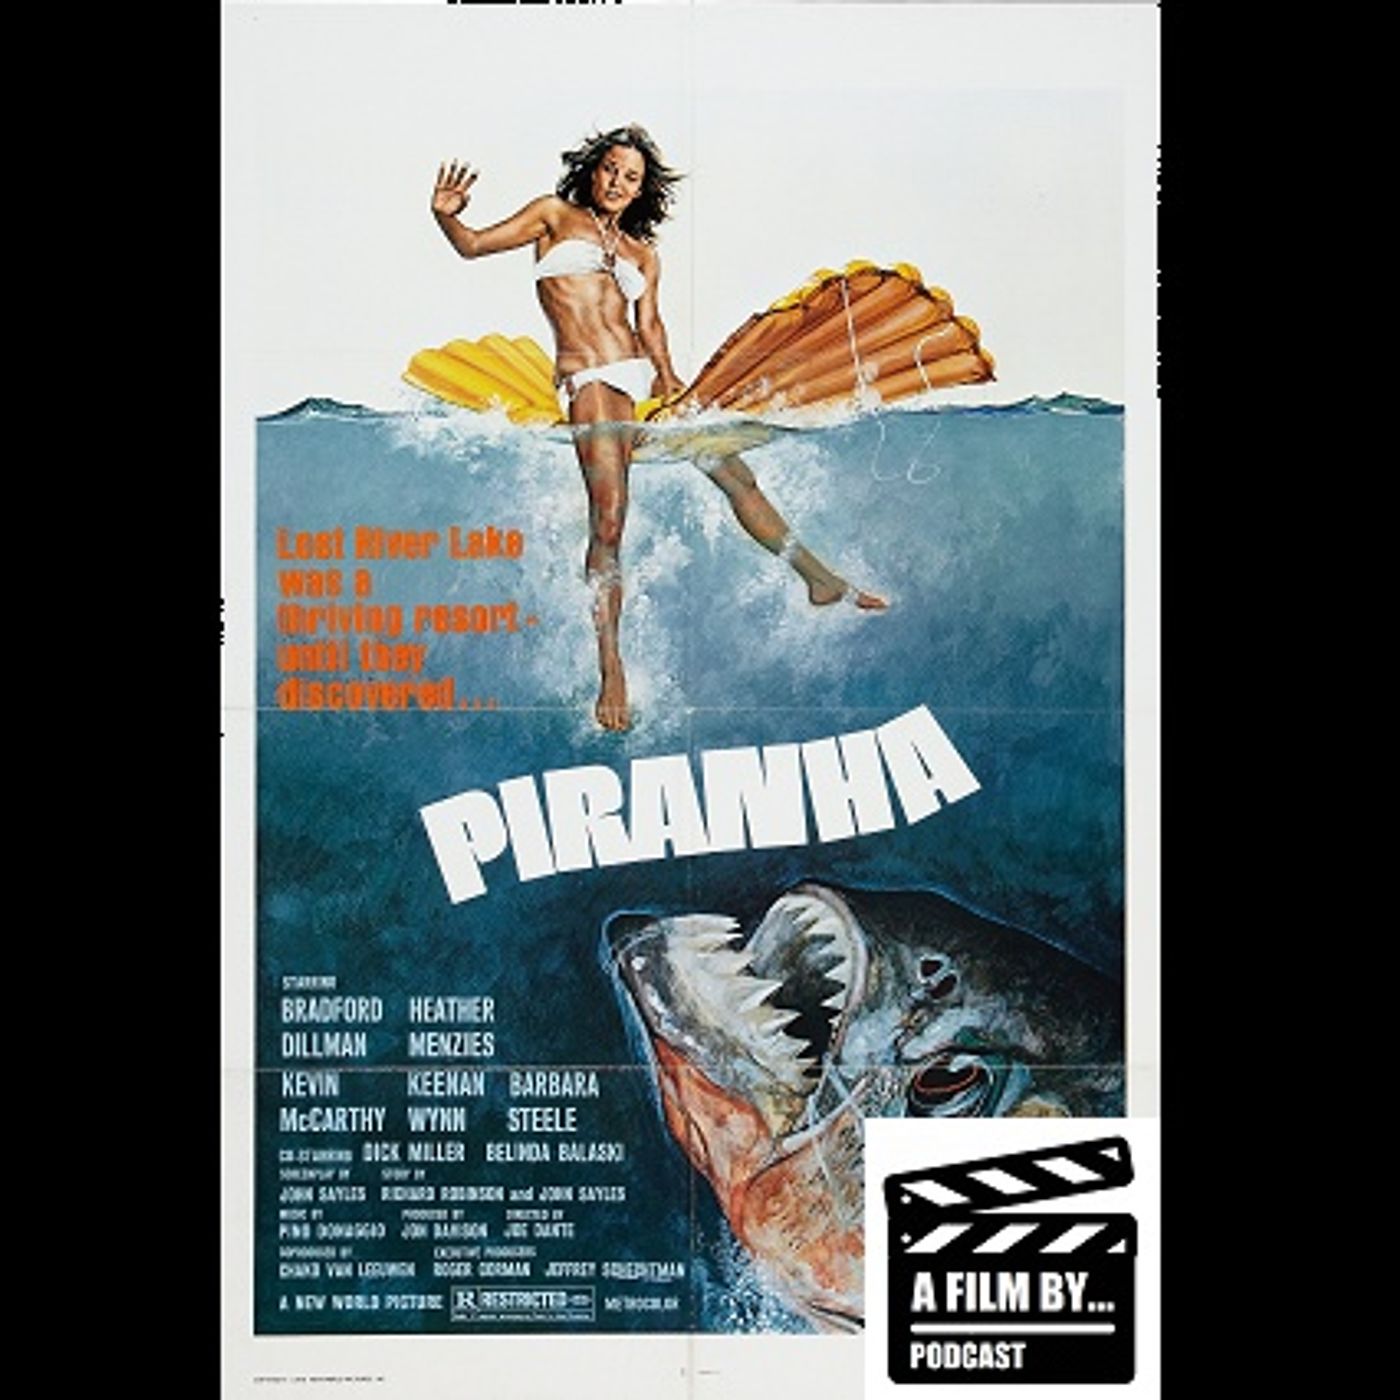 A Film at 45 - Piranha